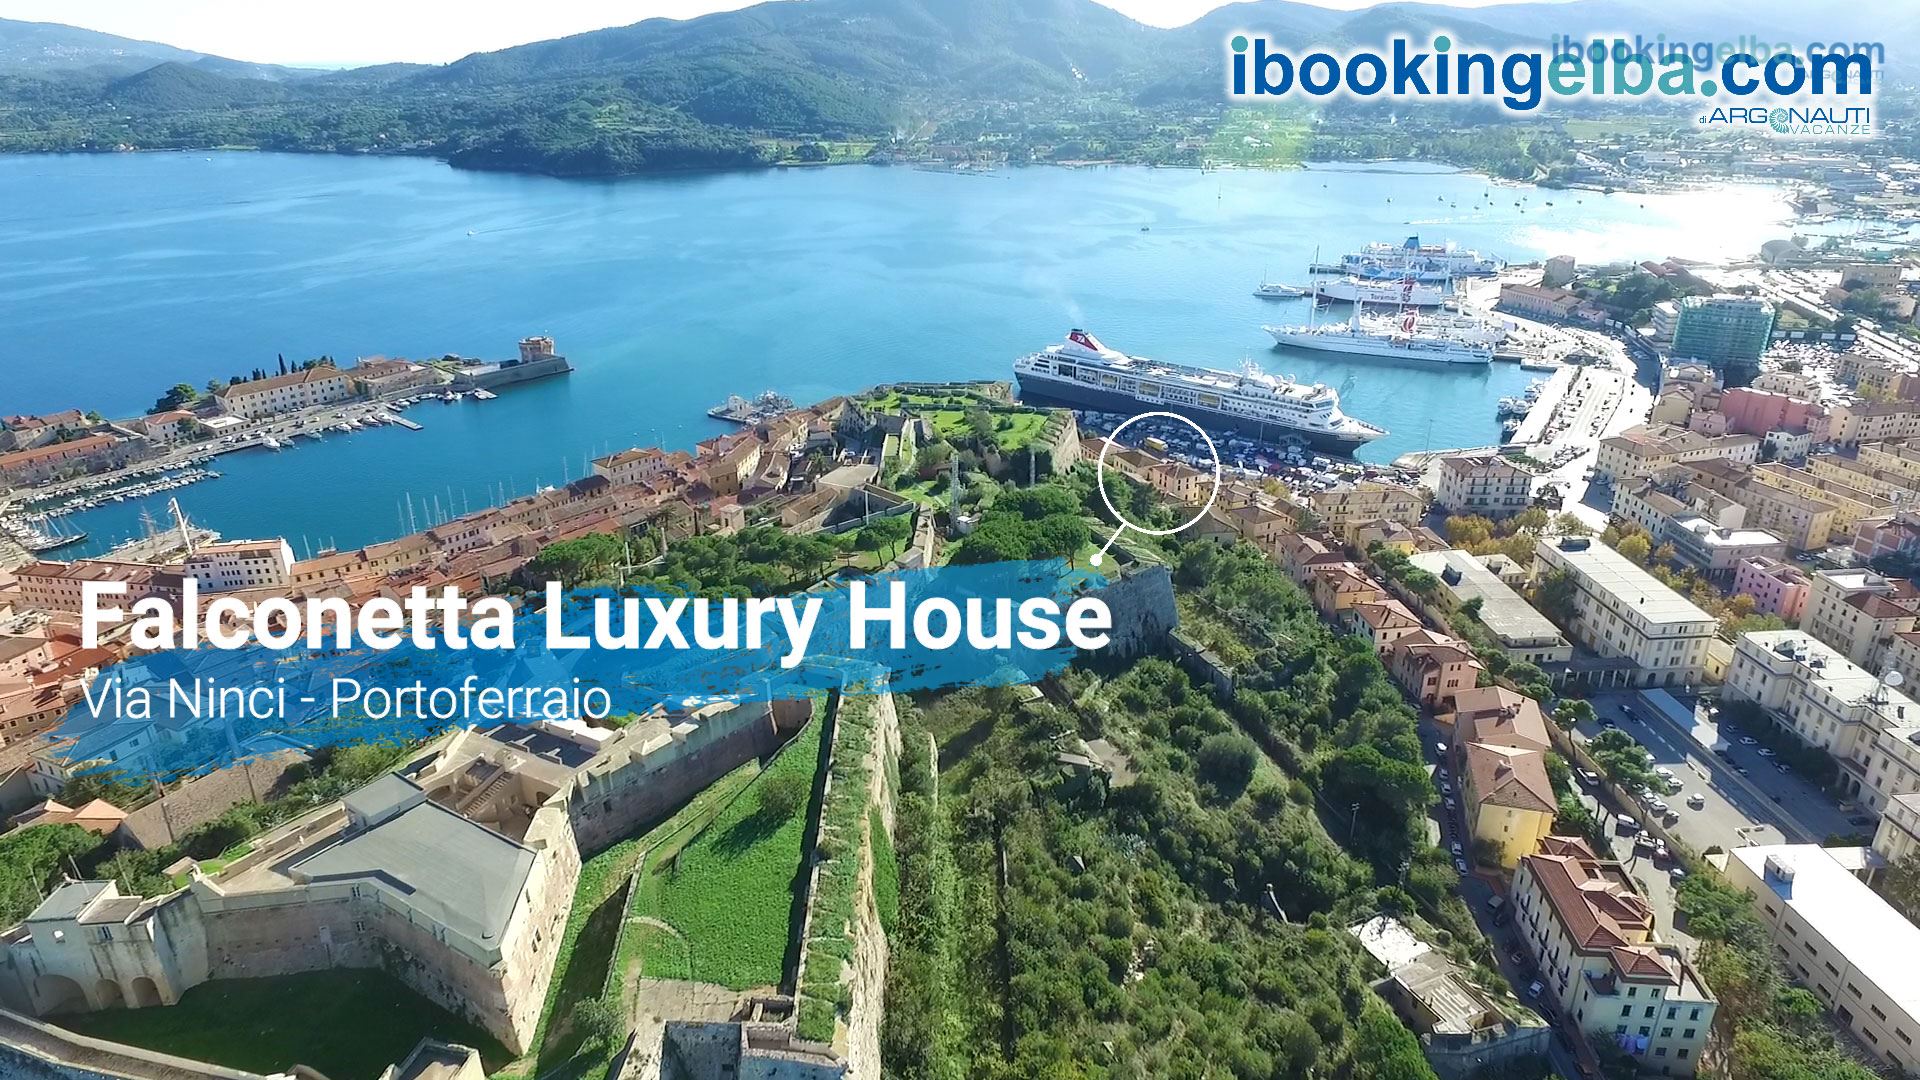 Falconetta Luxury House - Vista aerea